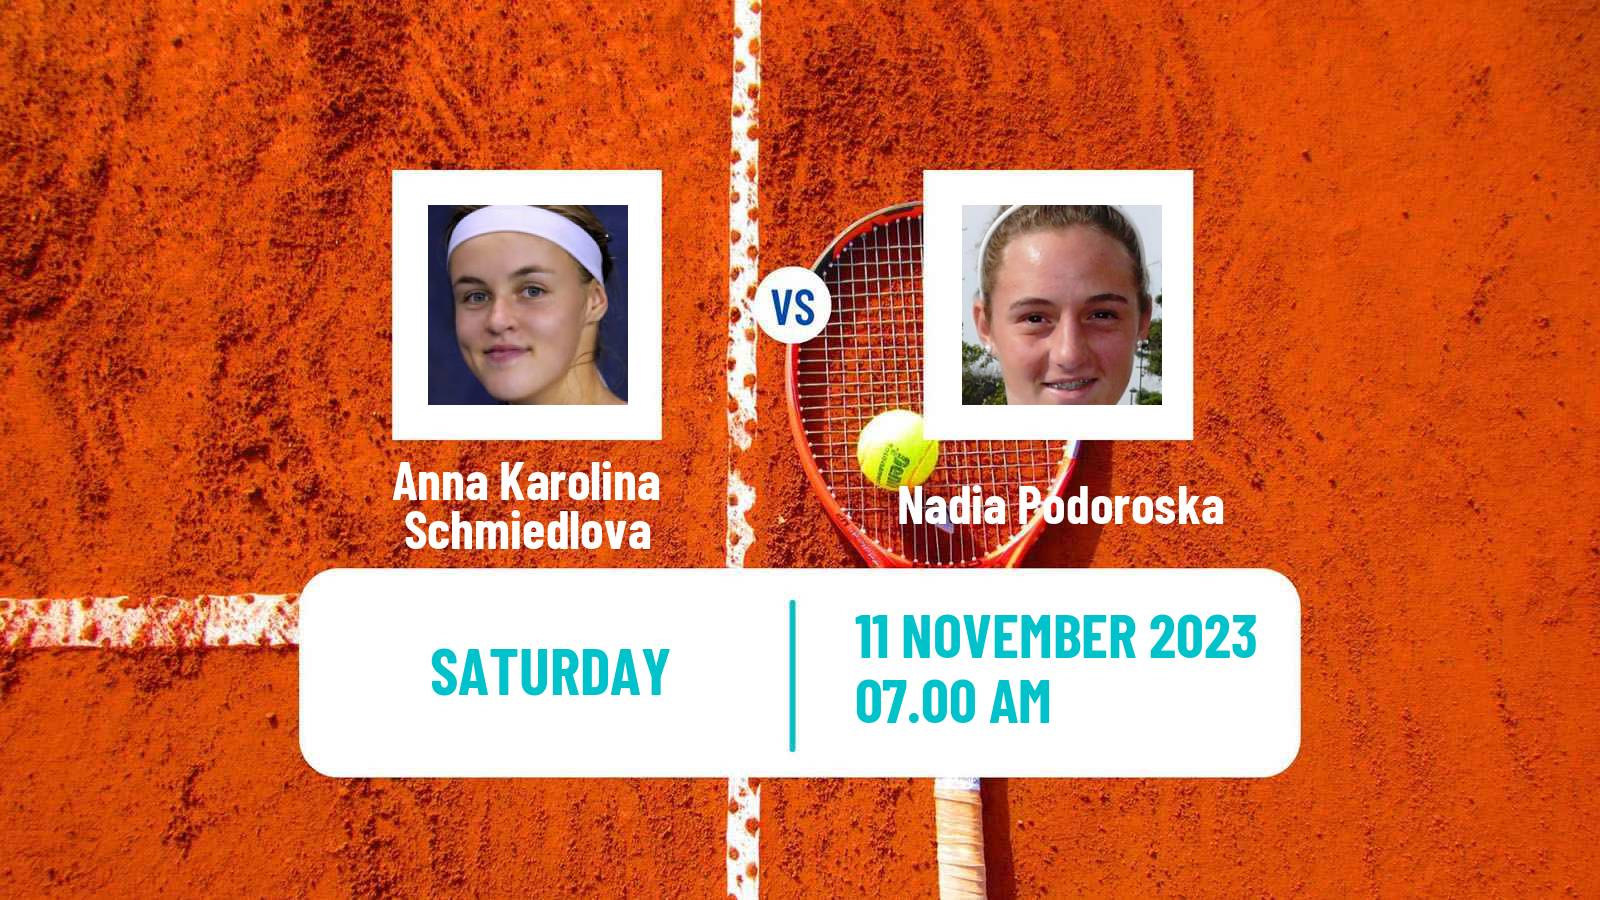 Tennis WTA Billie Jean King Cup World Group Anna Karolina Schmiedlova - Nadia Podoroska